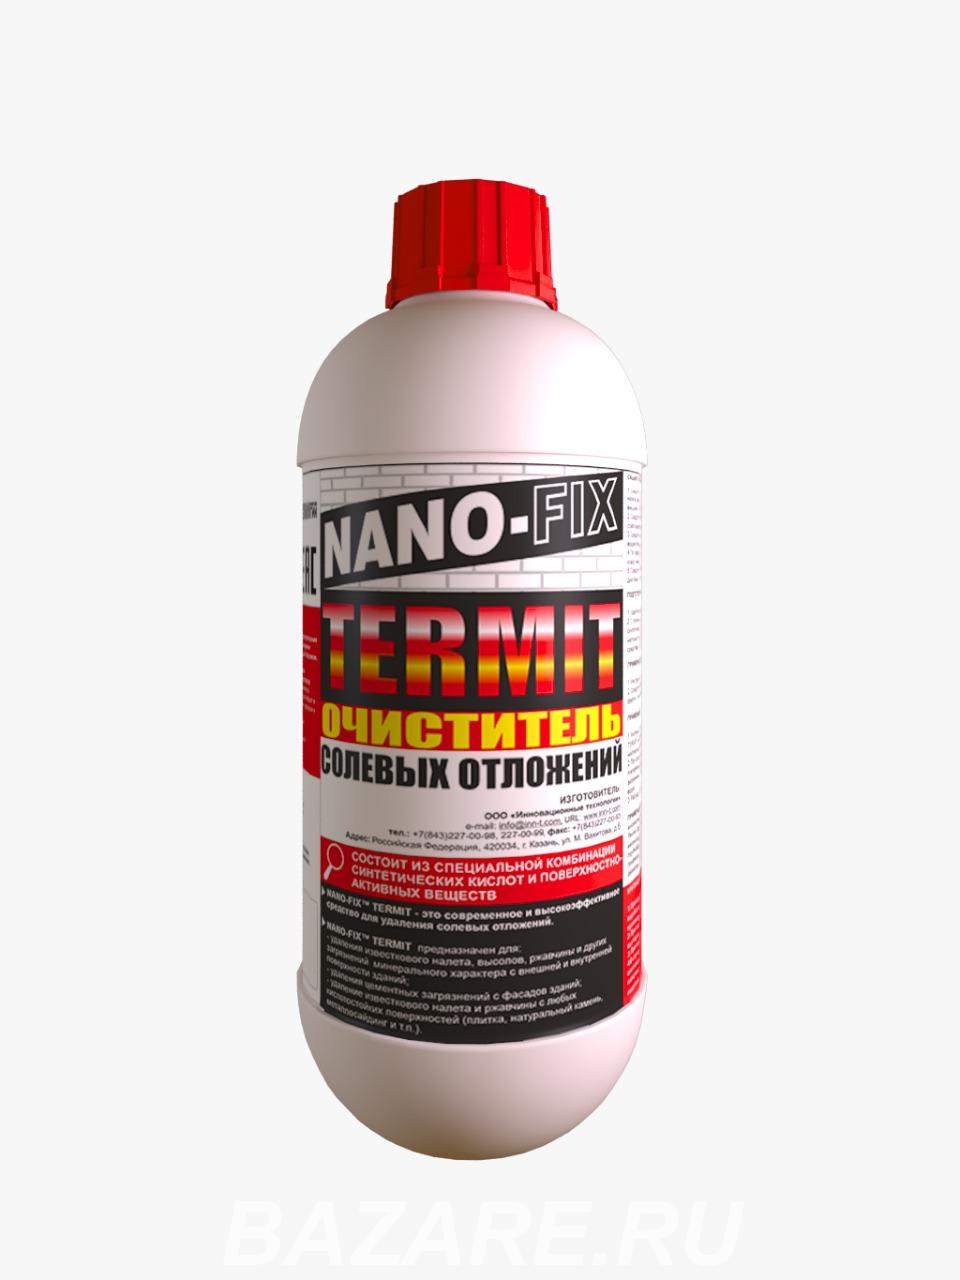 Nano - fix termit - средство от солевых отложений, Москва